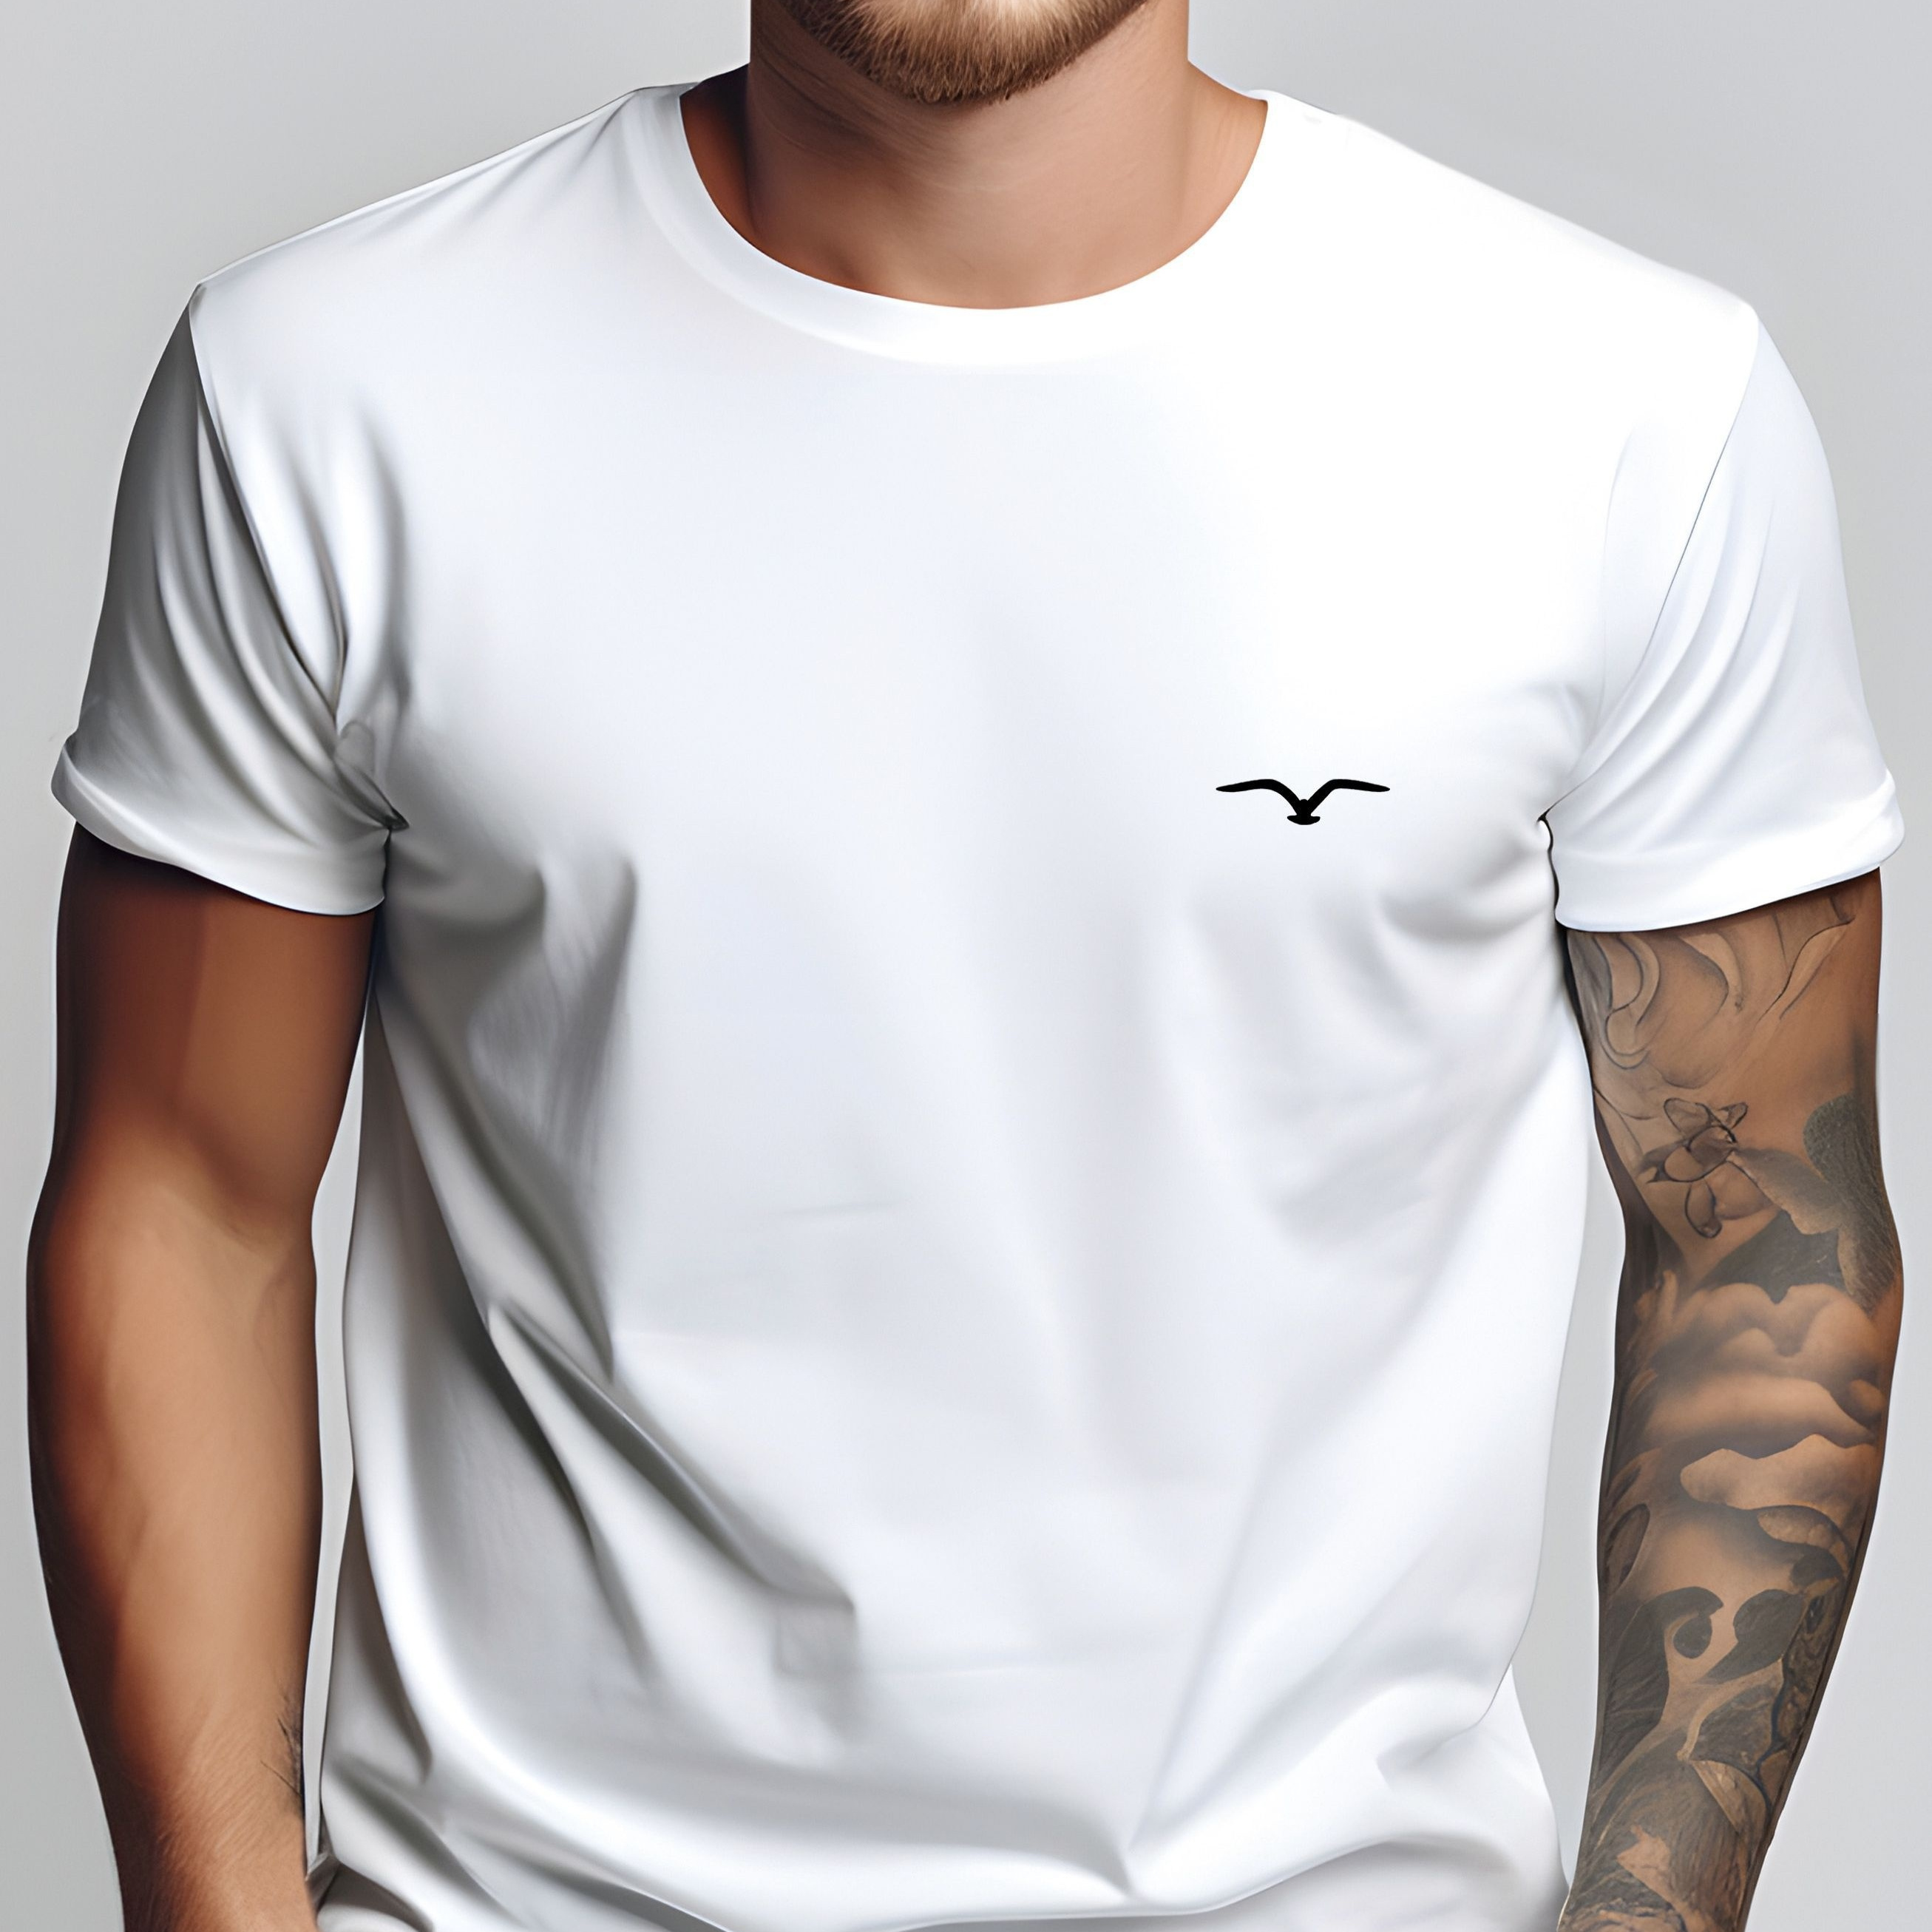 

Seagull Print Tee Shirt, Tees For Men, Casual Short Sleeve T-shirt For Summer